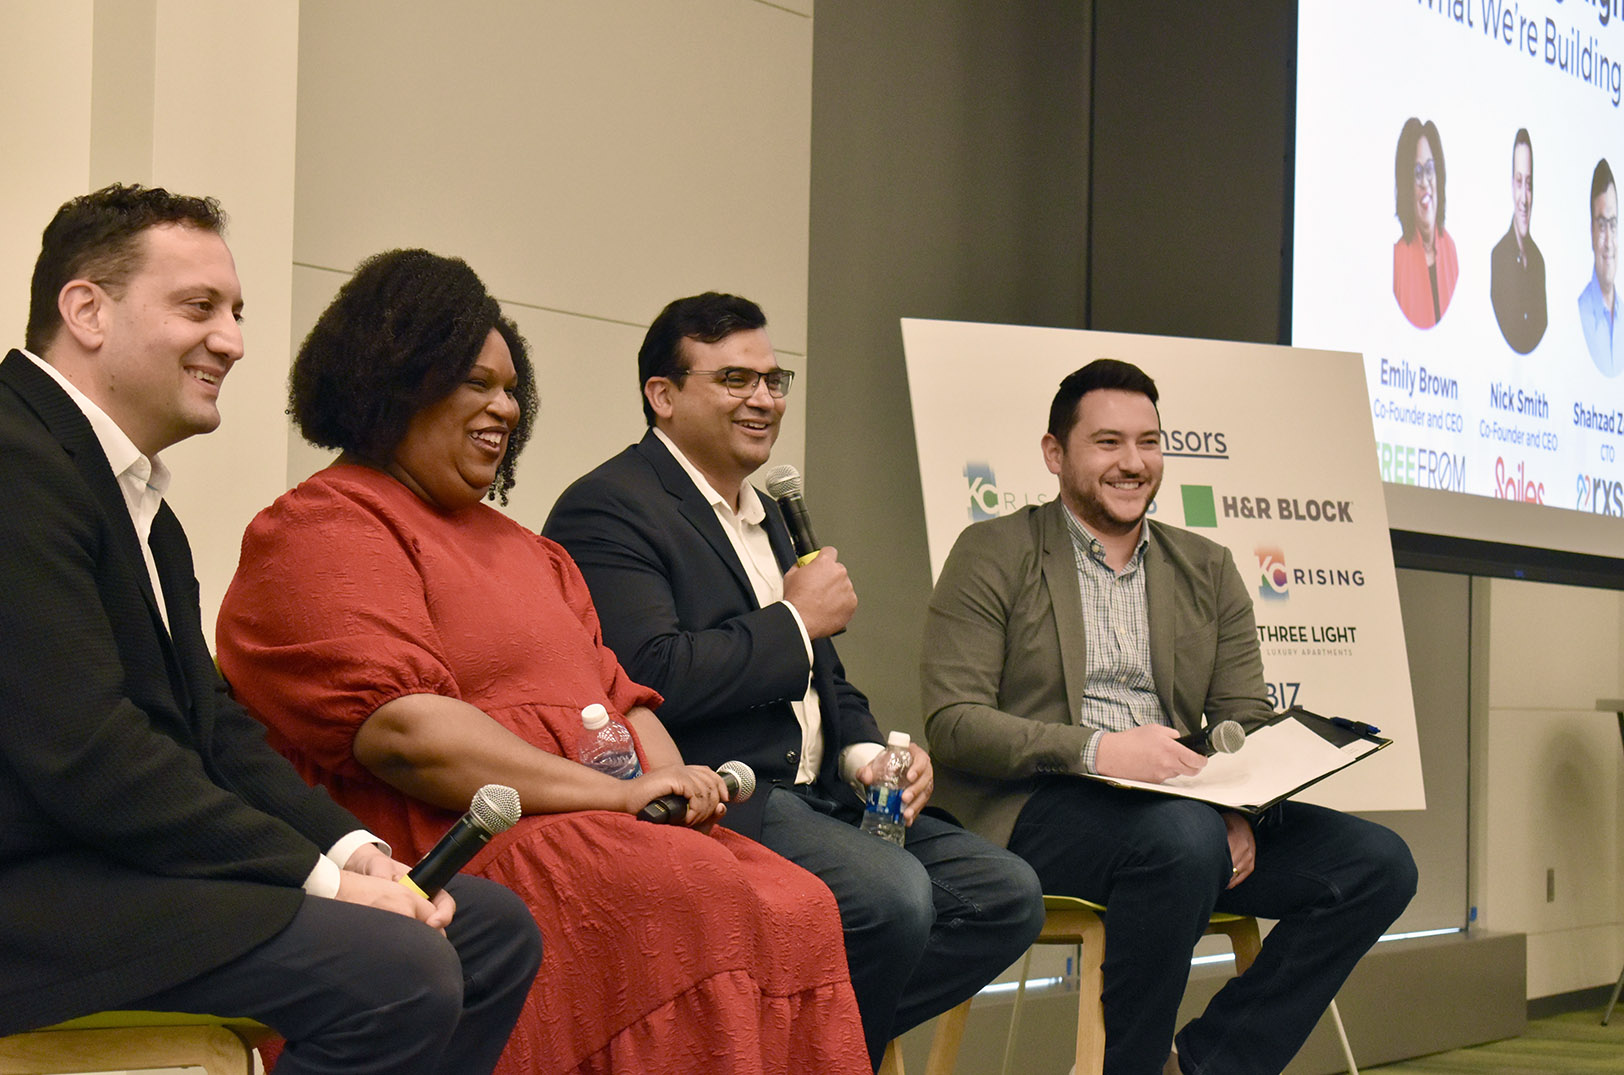 Startup ambassadors’ pitch to former Kansas Citians: Move your innovation, hustle Back2KC